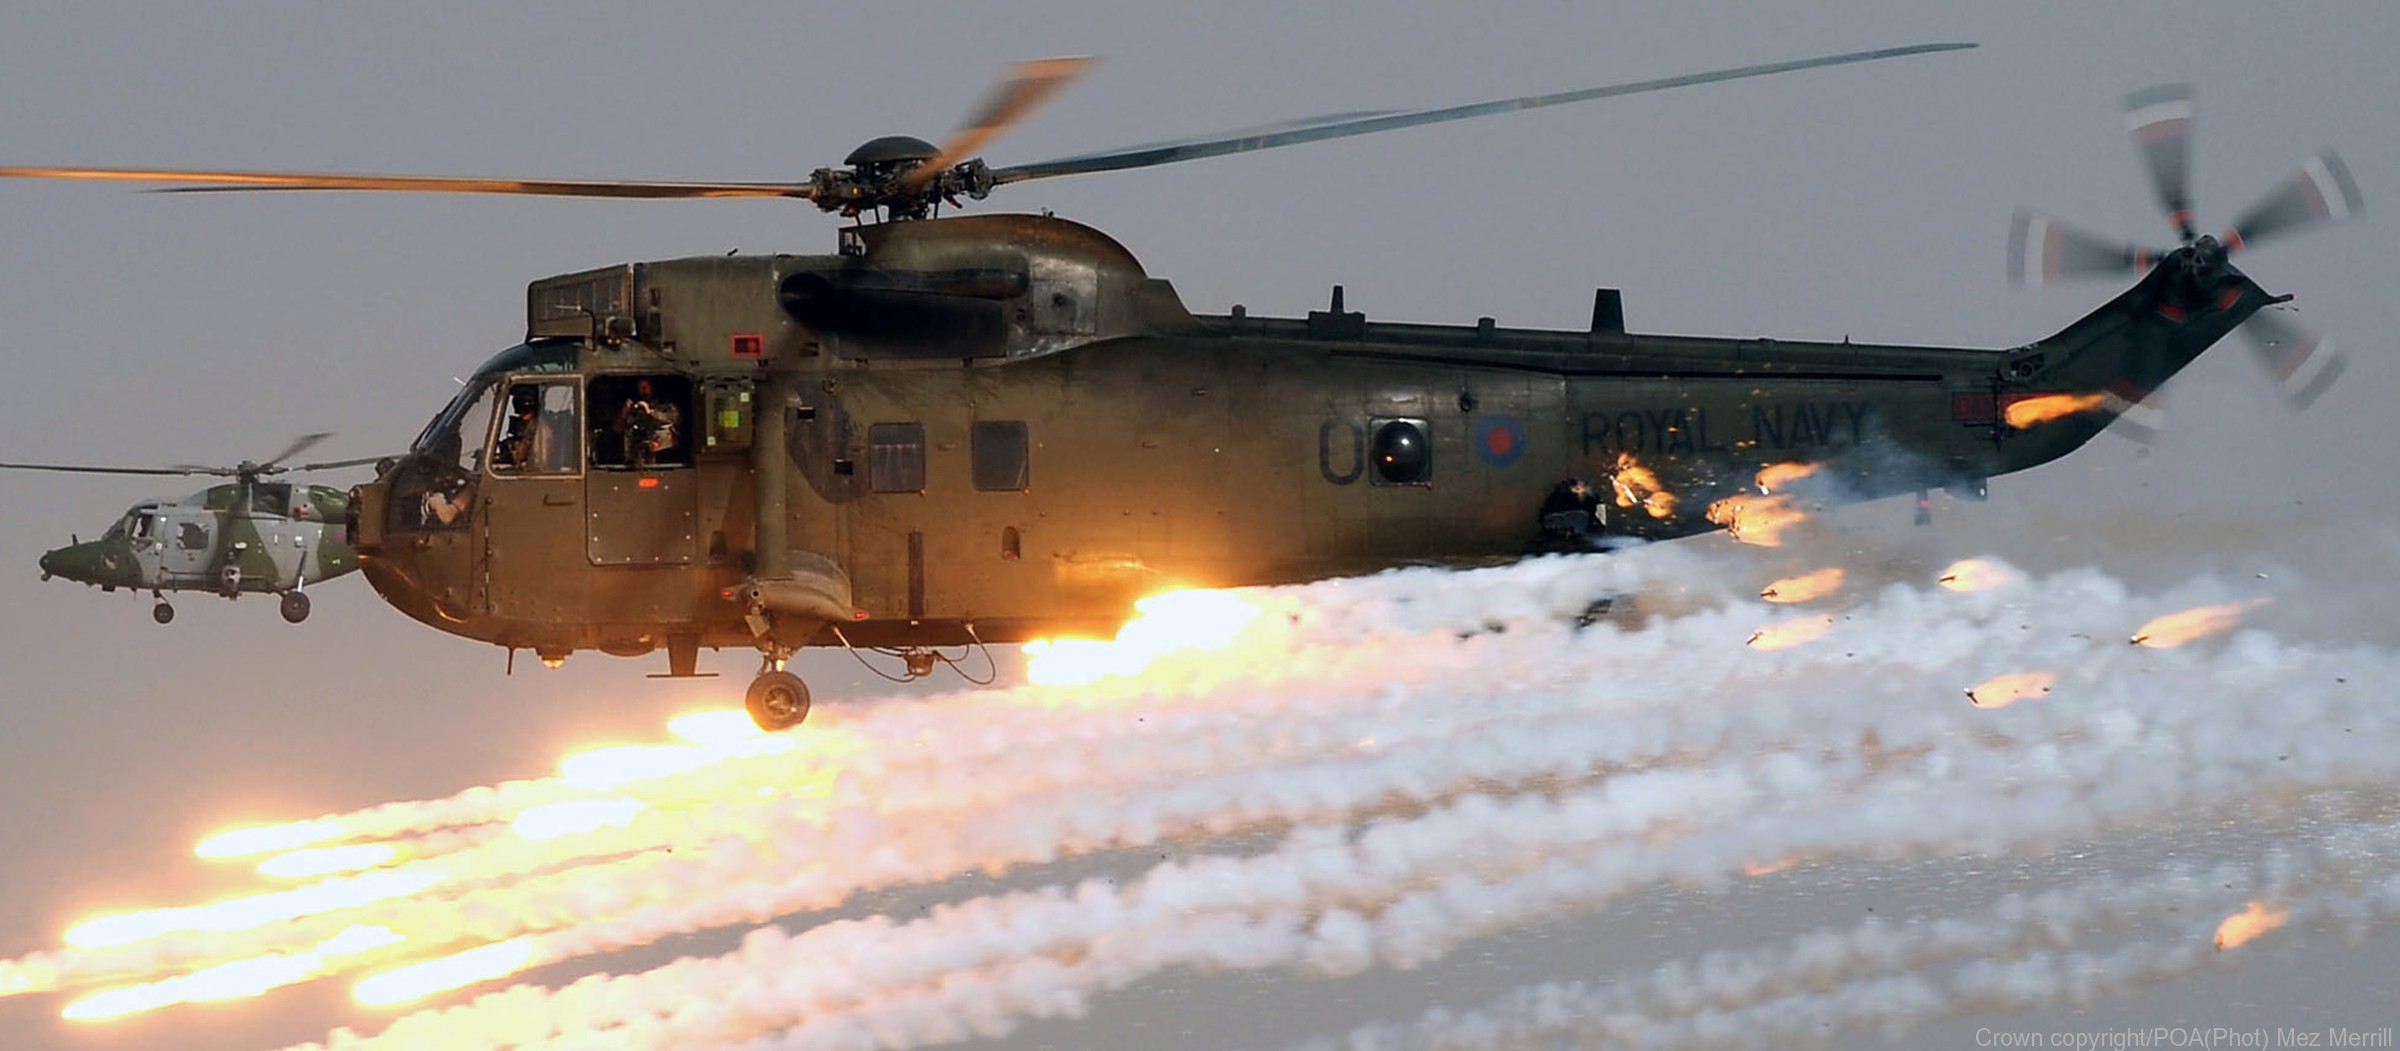 sea king hc.4 helicopter royal navy commando assault marines westland nas squadron rnas 10 flare chaff decoy